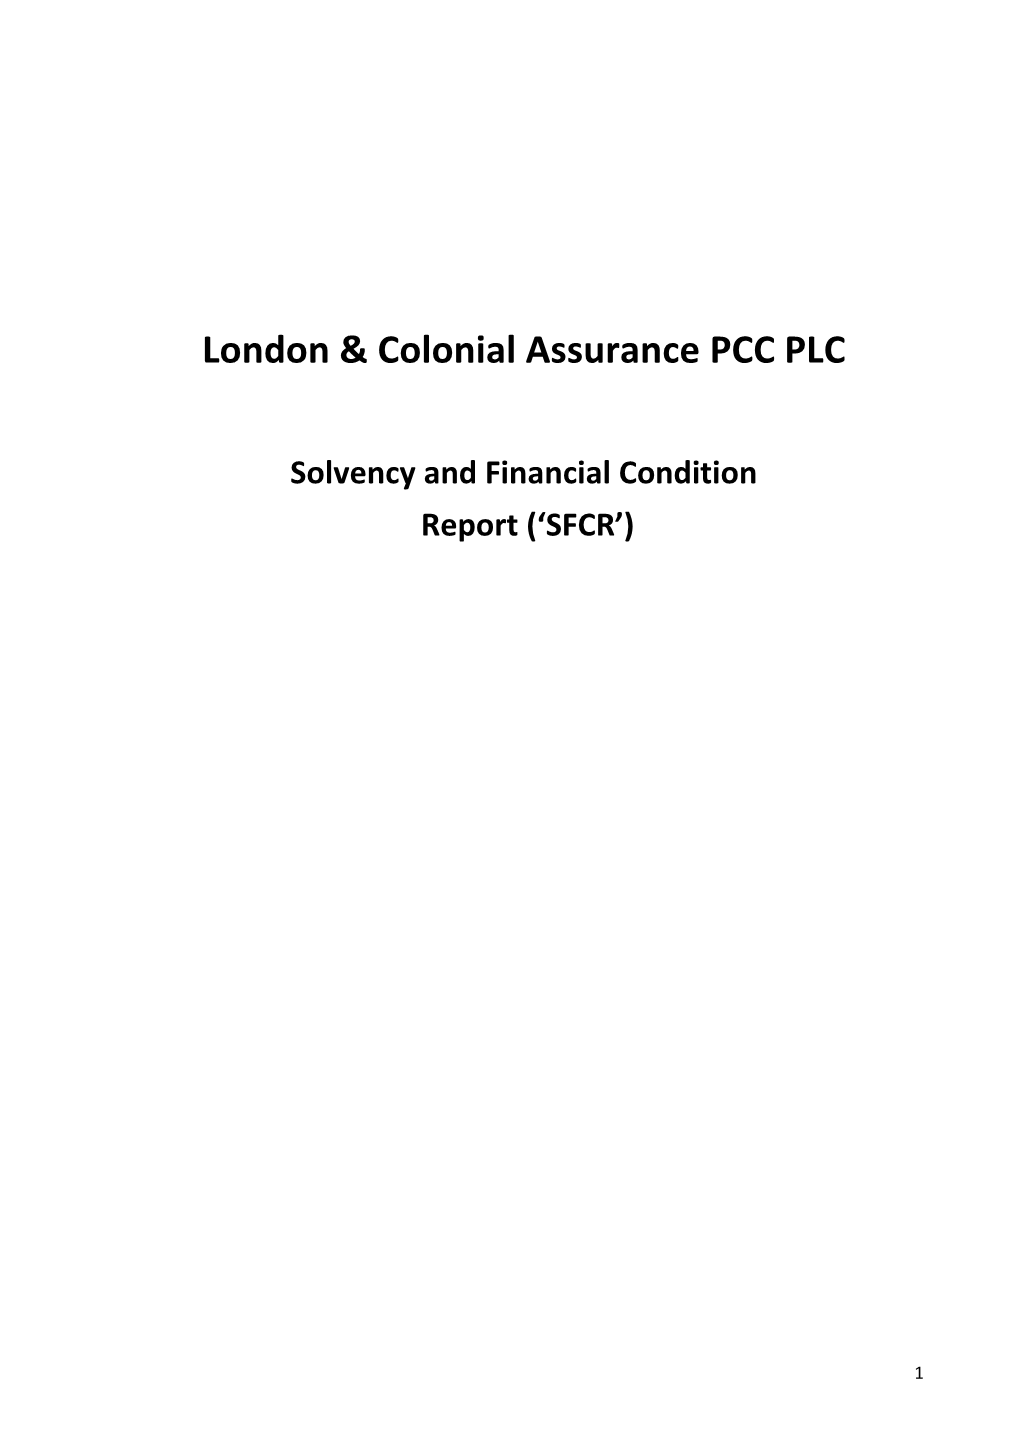 London & Colonial Assurance PCC